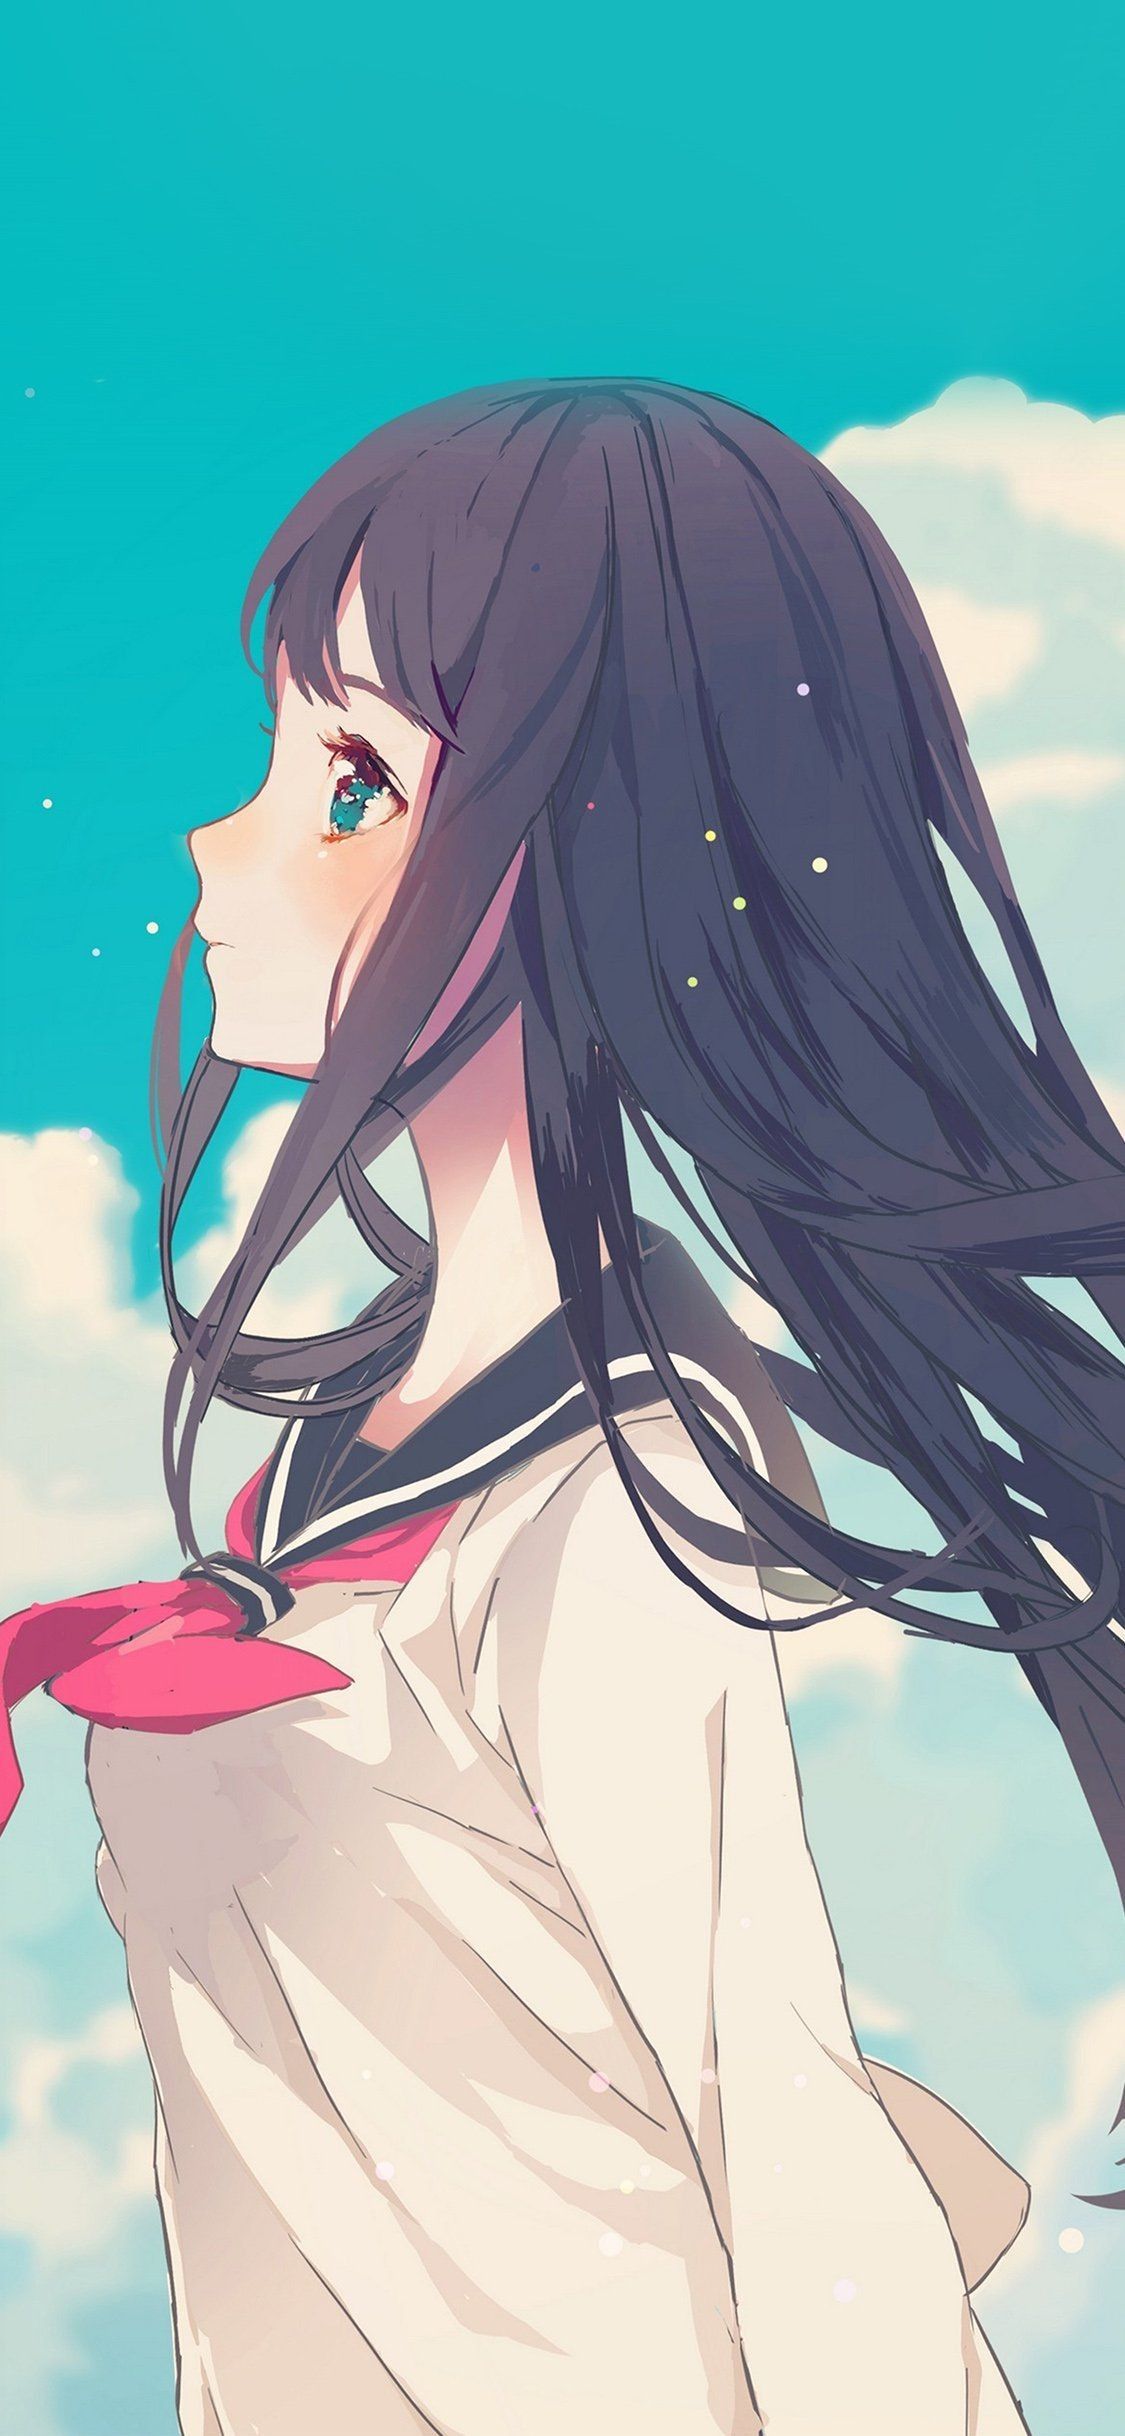 Anime Wallpaper Cute - Cute Anime Girl 4K Wallpaper / Filter by device